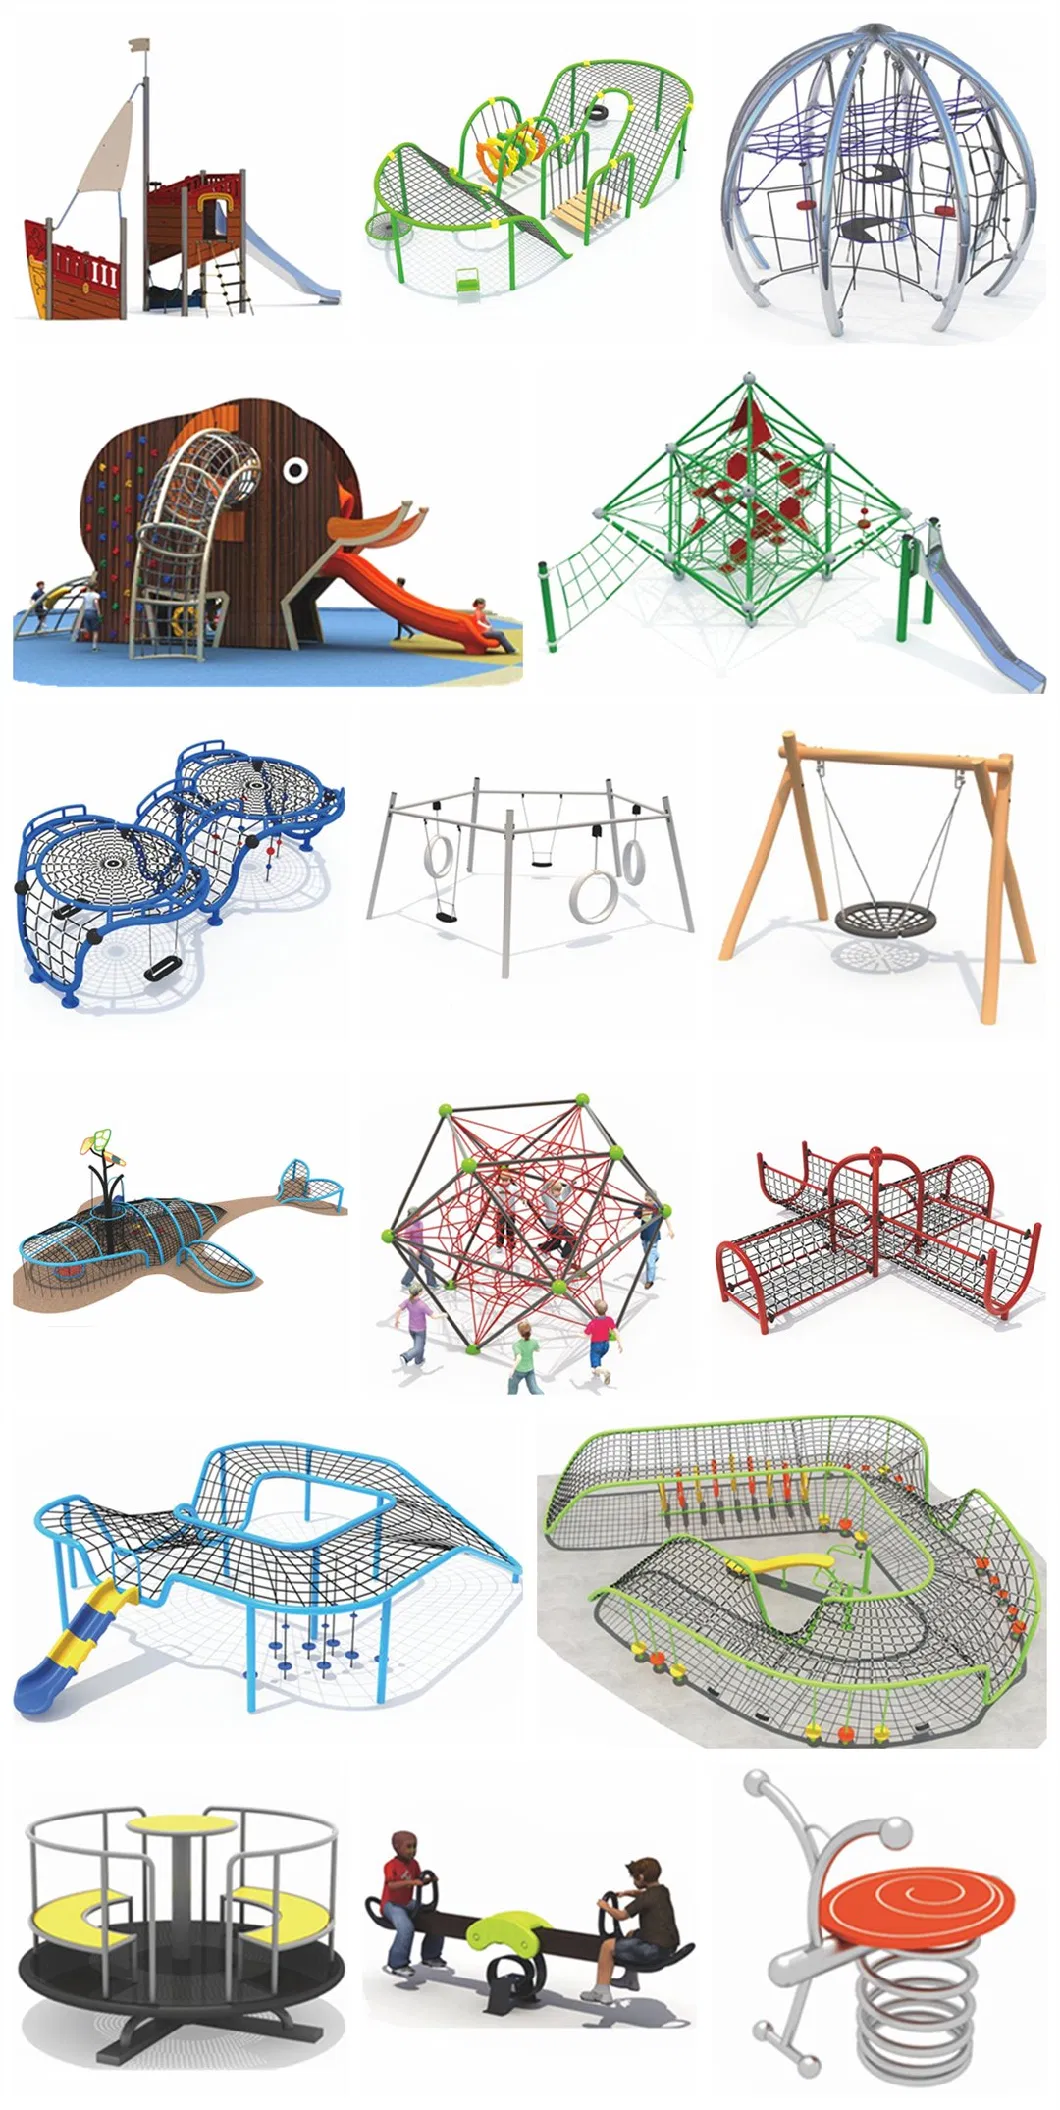 Outdoor Park Kids Playground Plastic Castle Slide Climbing Equipment Kl28